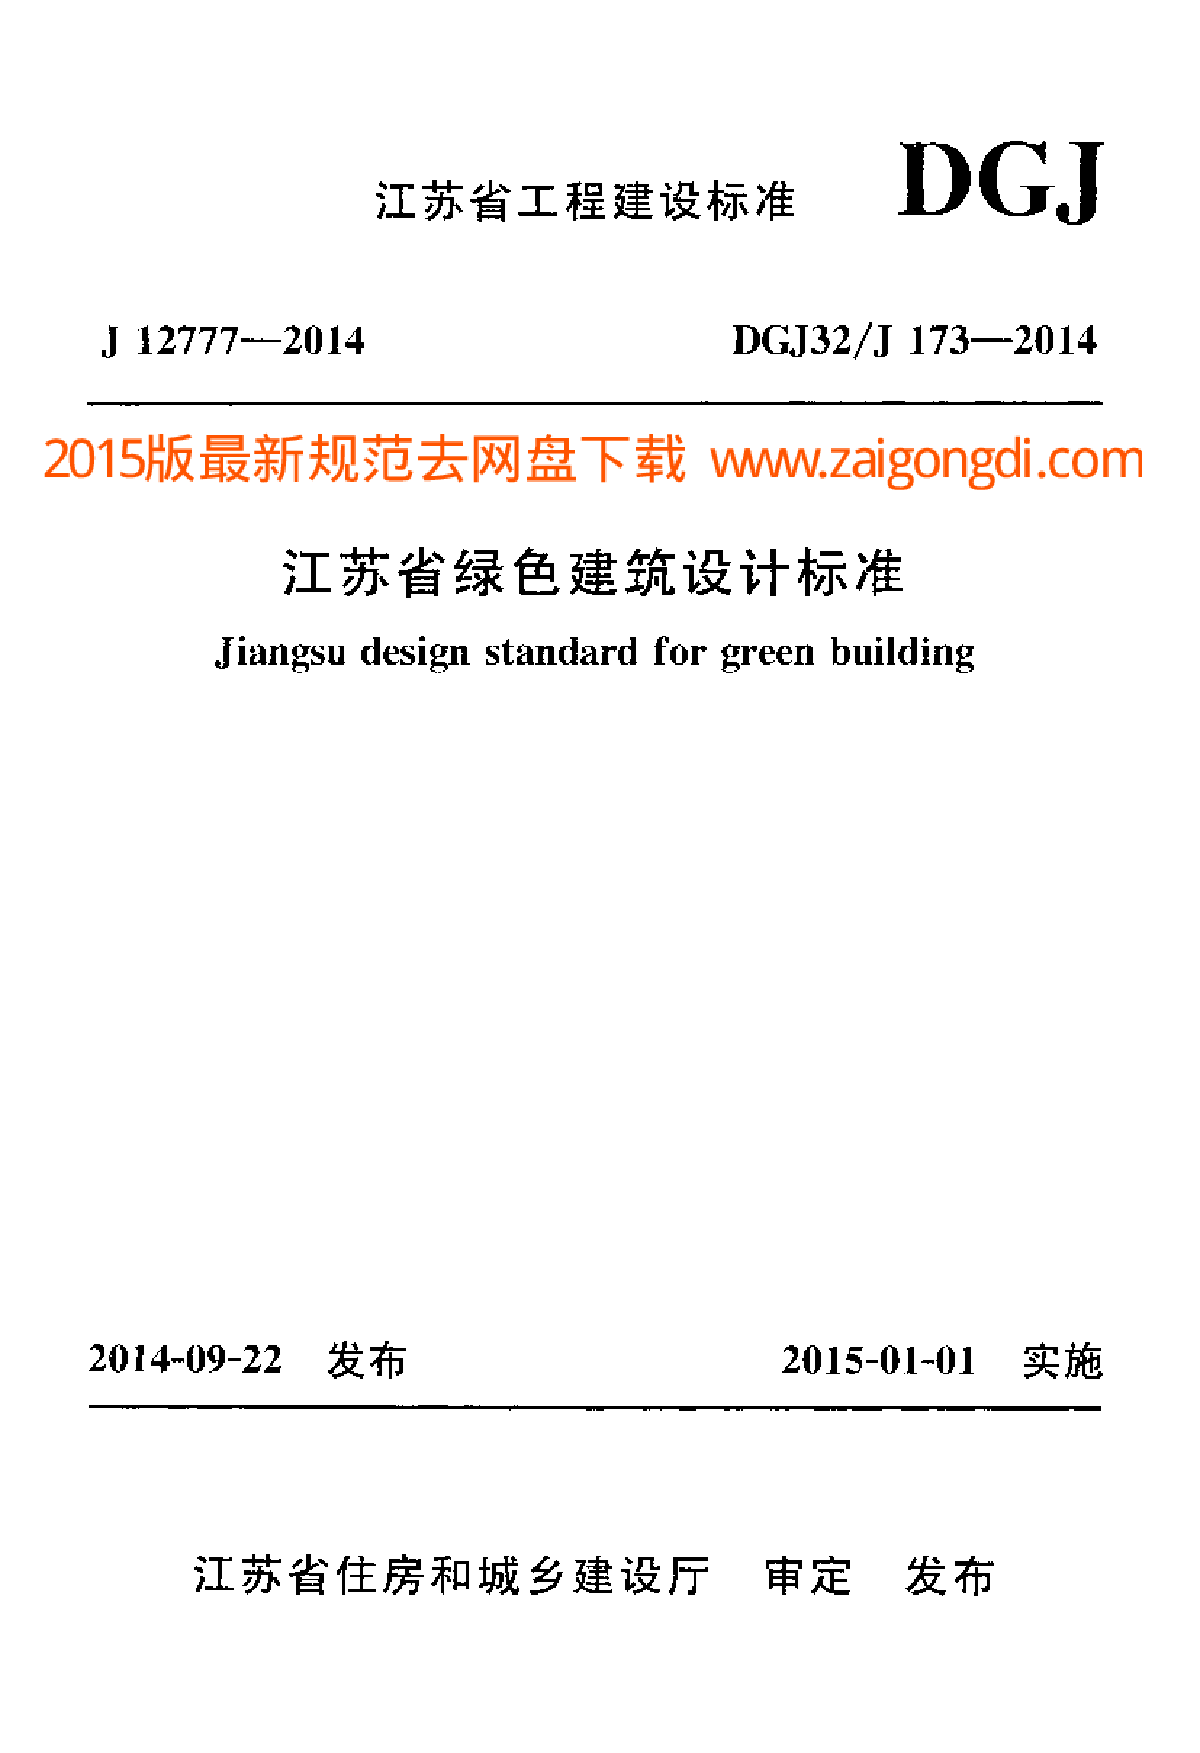 DGJ32J 173-2014 江苏省绿色建筑设计标准-图一